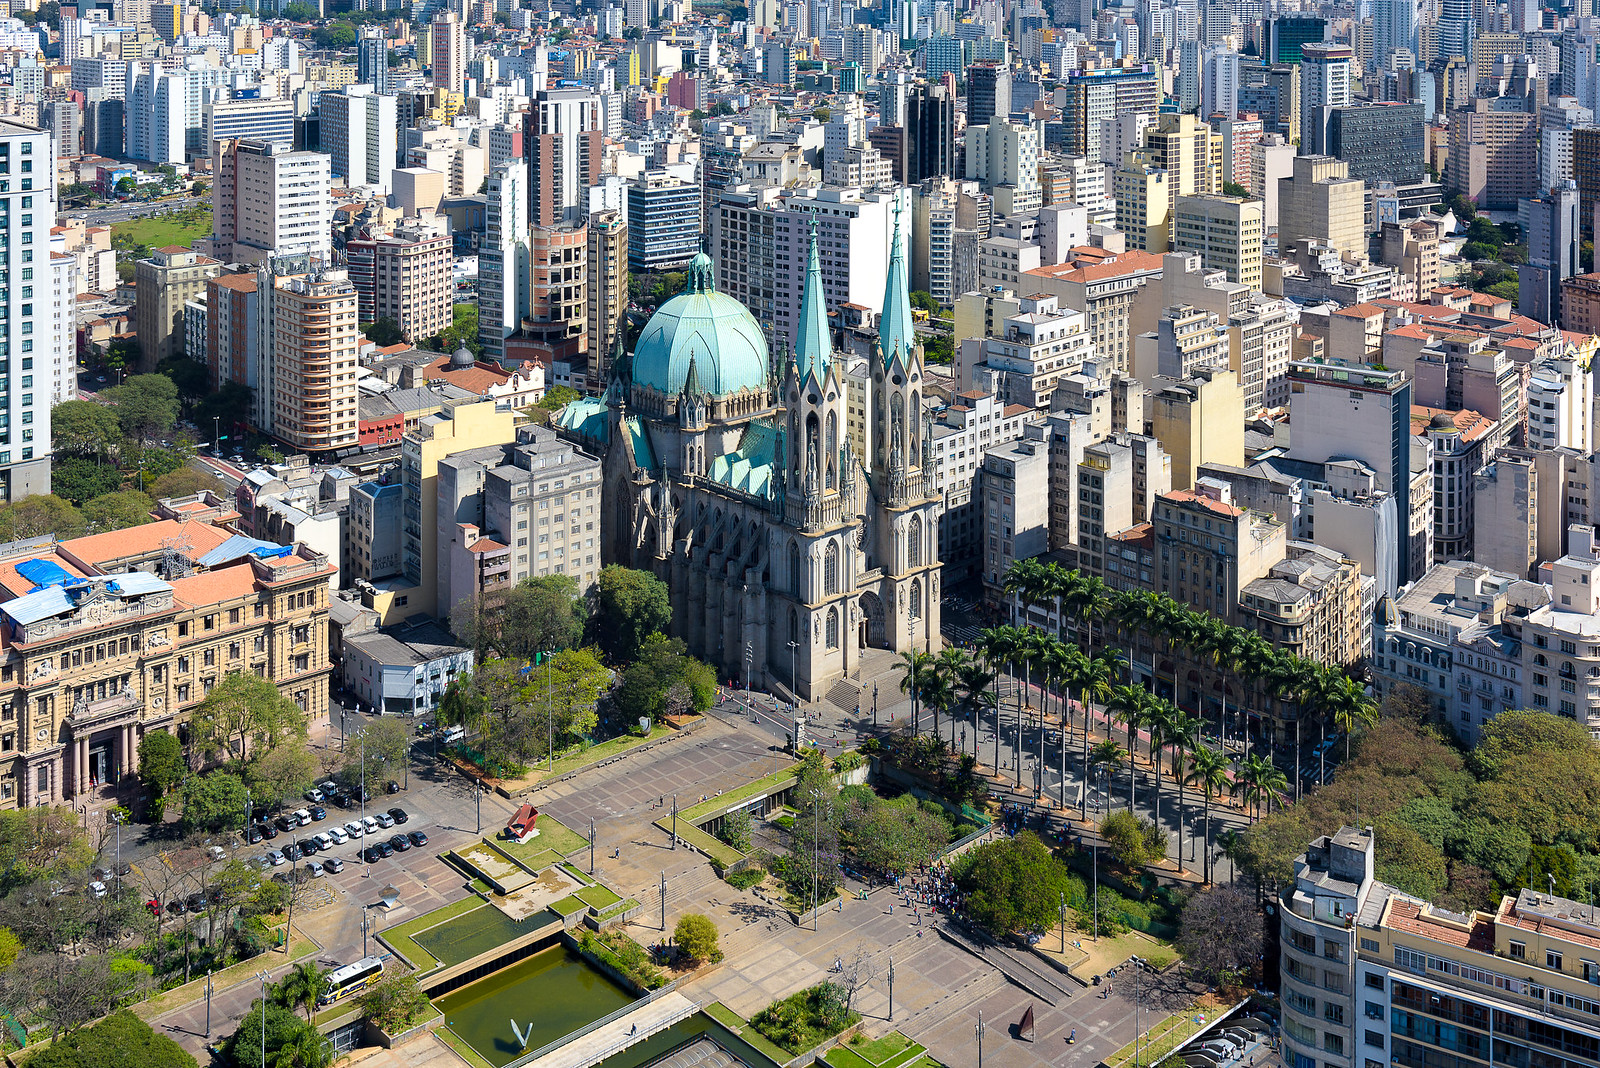 Catedral da Sé, São Paulo. auf Flickr. 